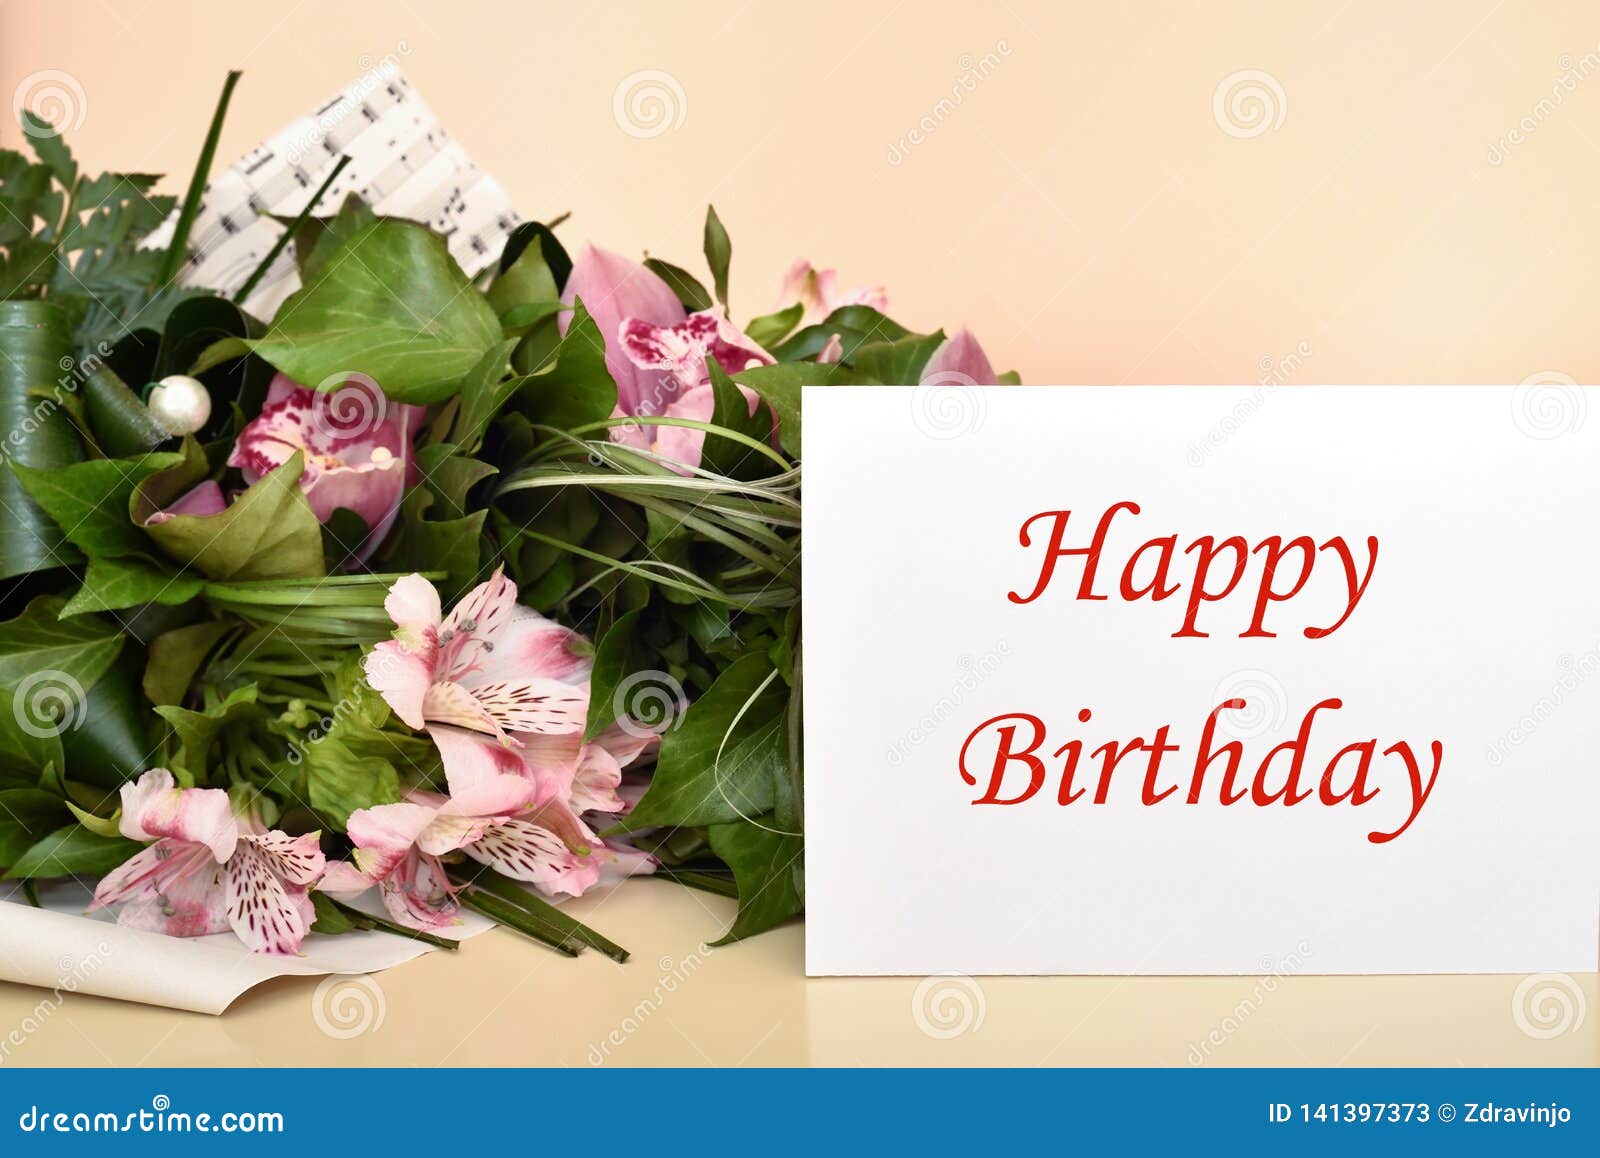 Happy birthday stock image. Image of greeting, design - 31353109